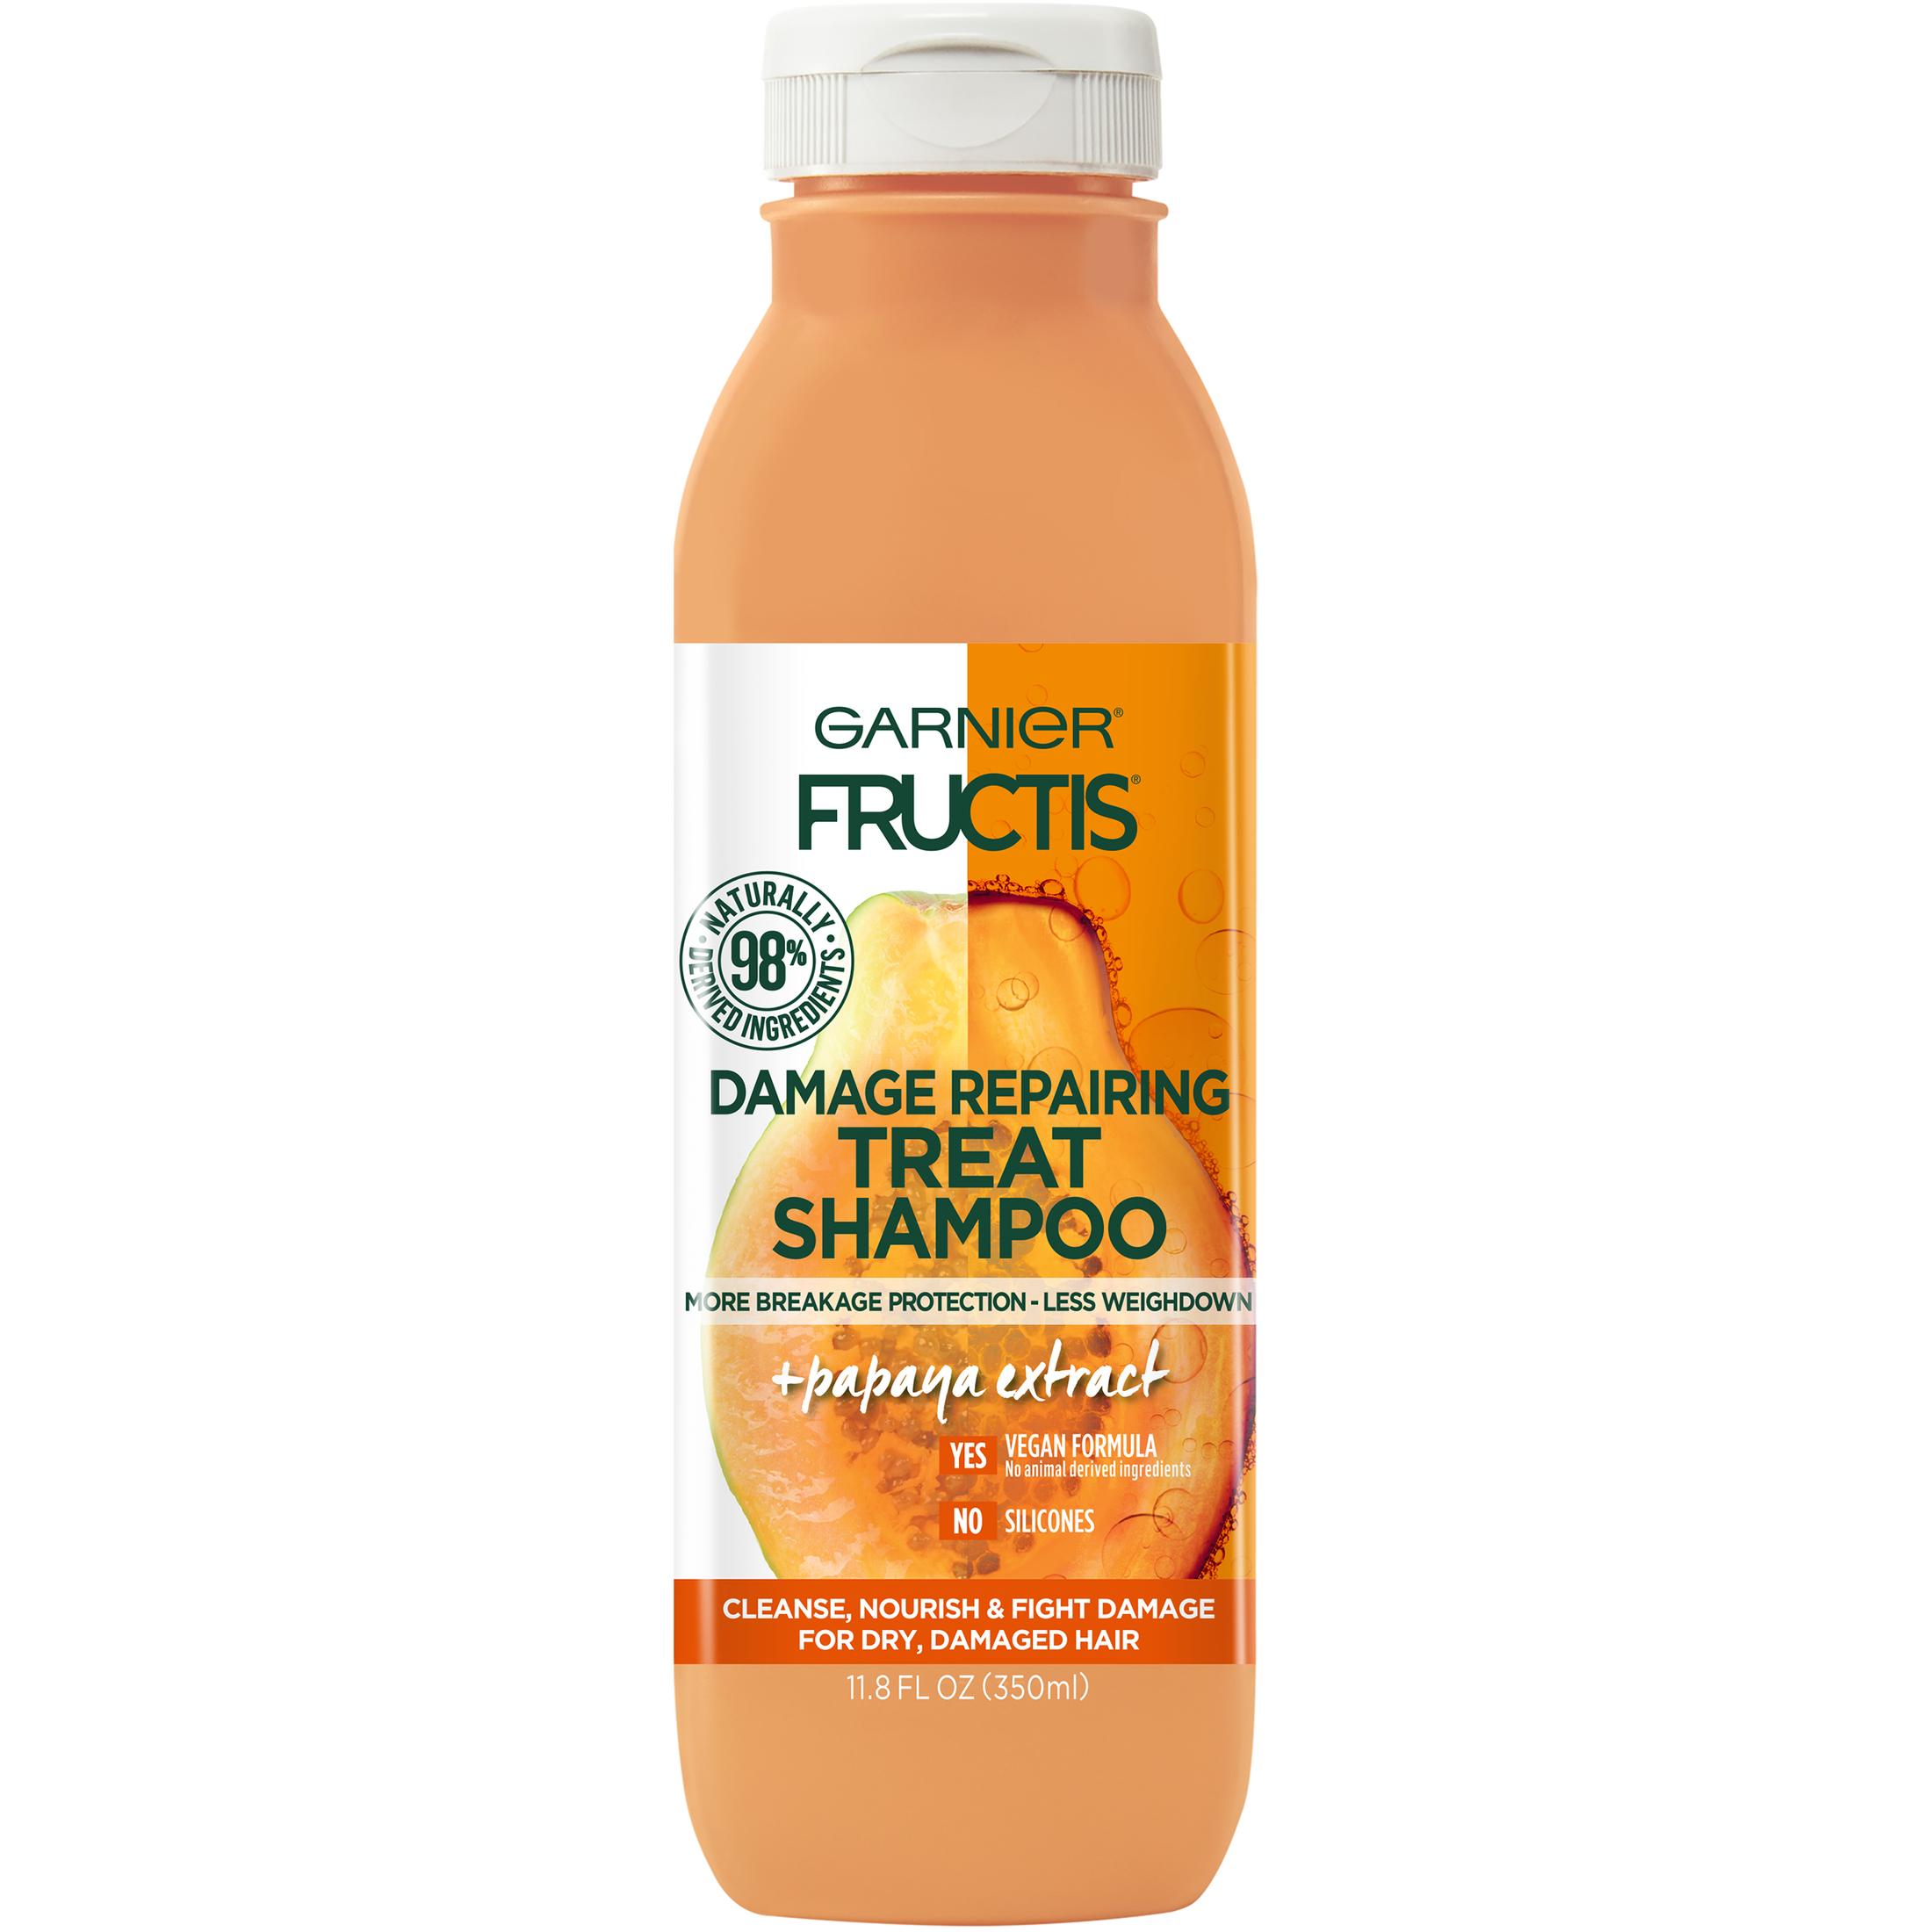 Garnier Fructis Damage Repairing Treat Shampoo with Papaya Extract, 11.8 fl oz - image 1 of 11